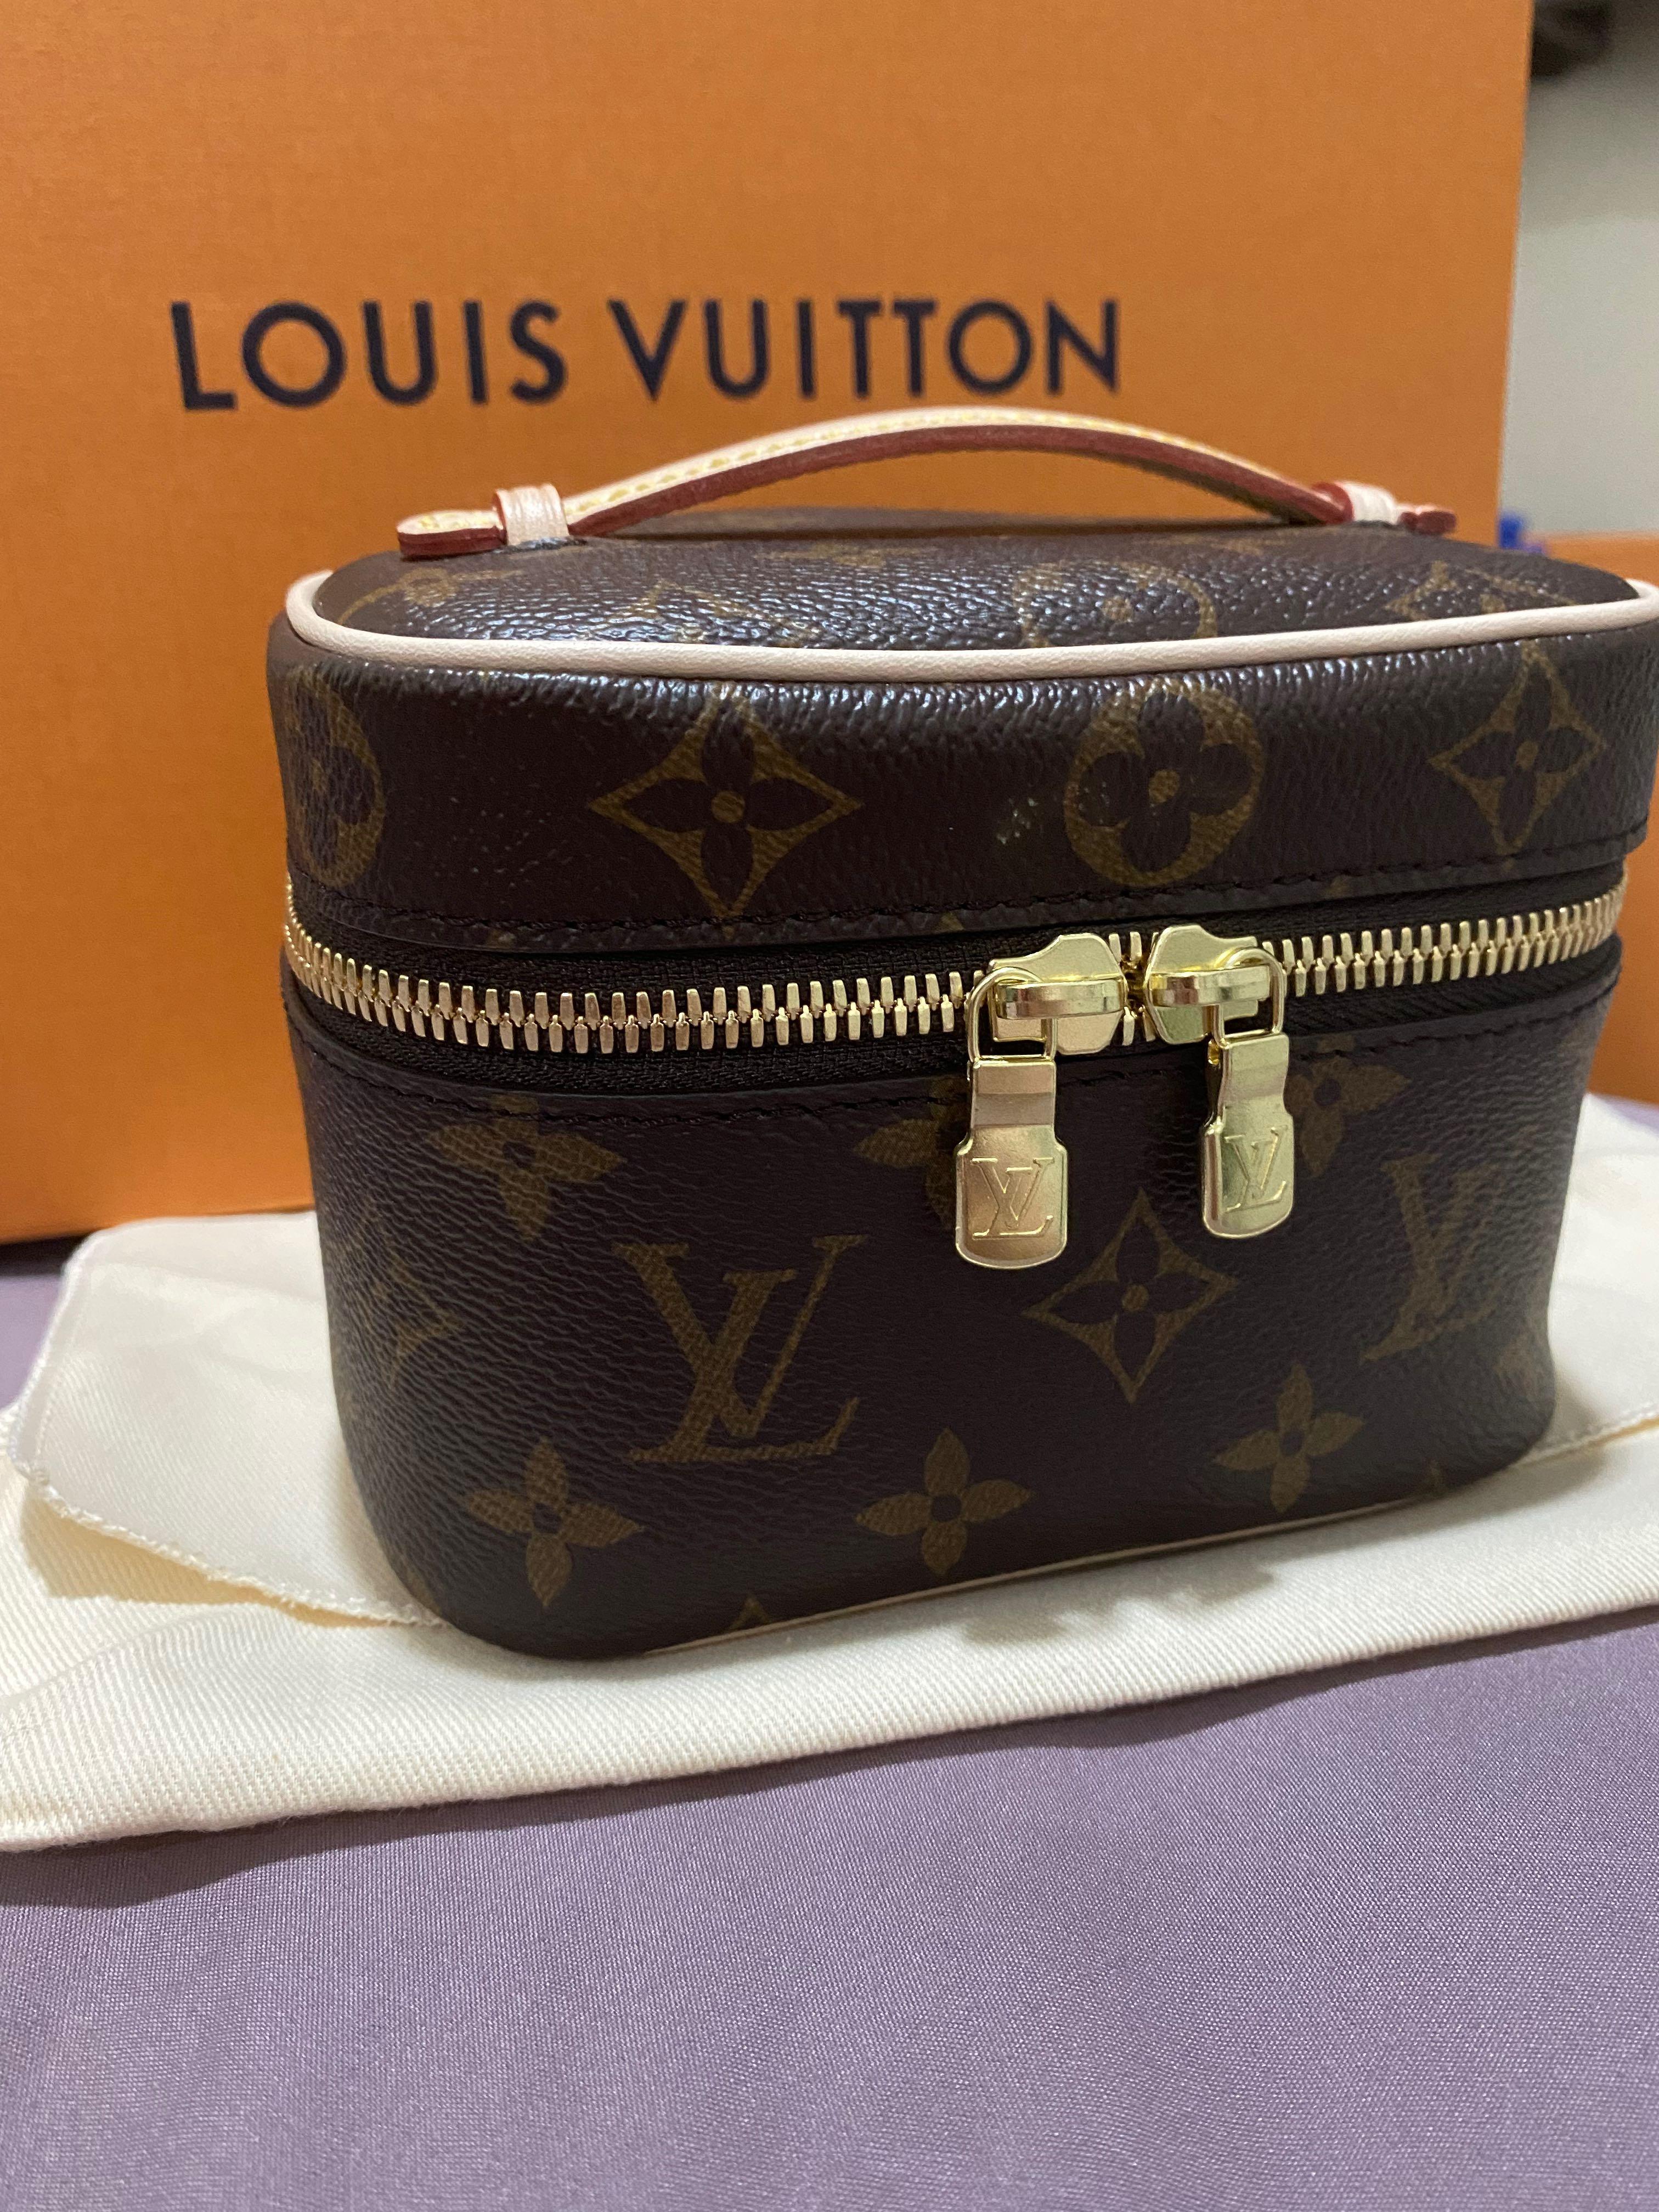 LV Nice Nano vanity, Luxury, Bags & Wallets on Carousell